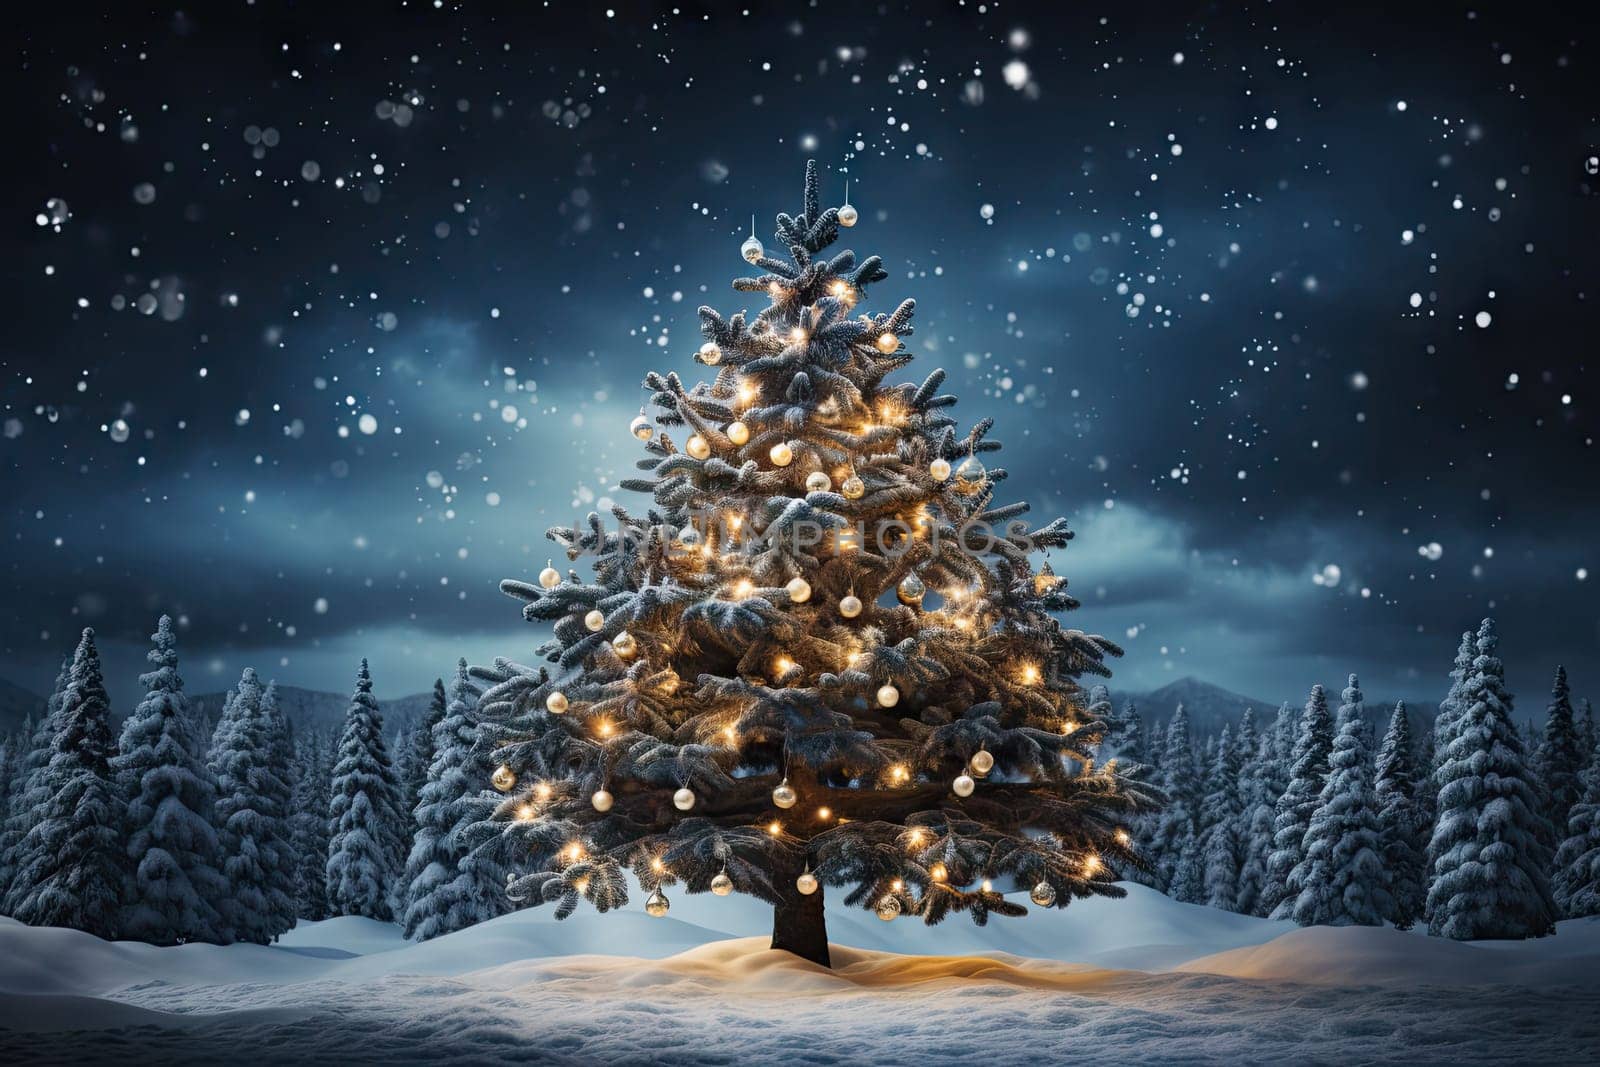 A Sparkling Christmas Tree Illuminating a Serene Winter Wonderland